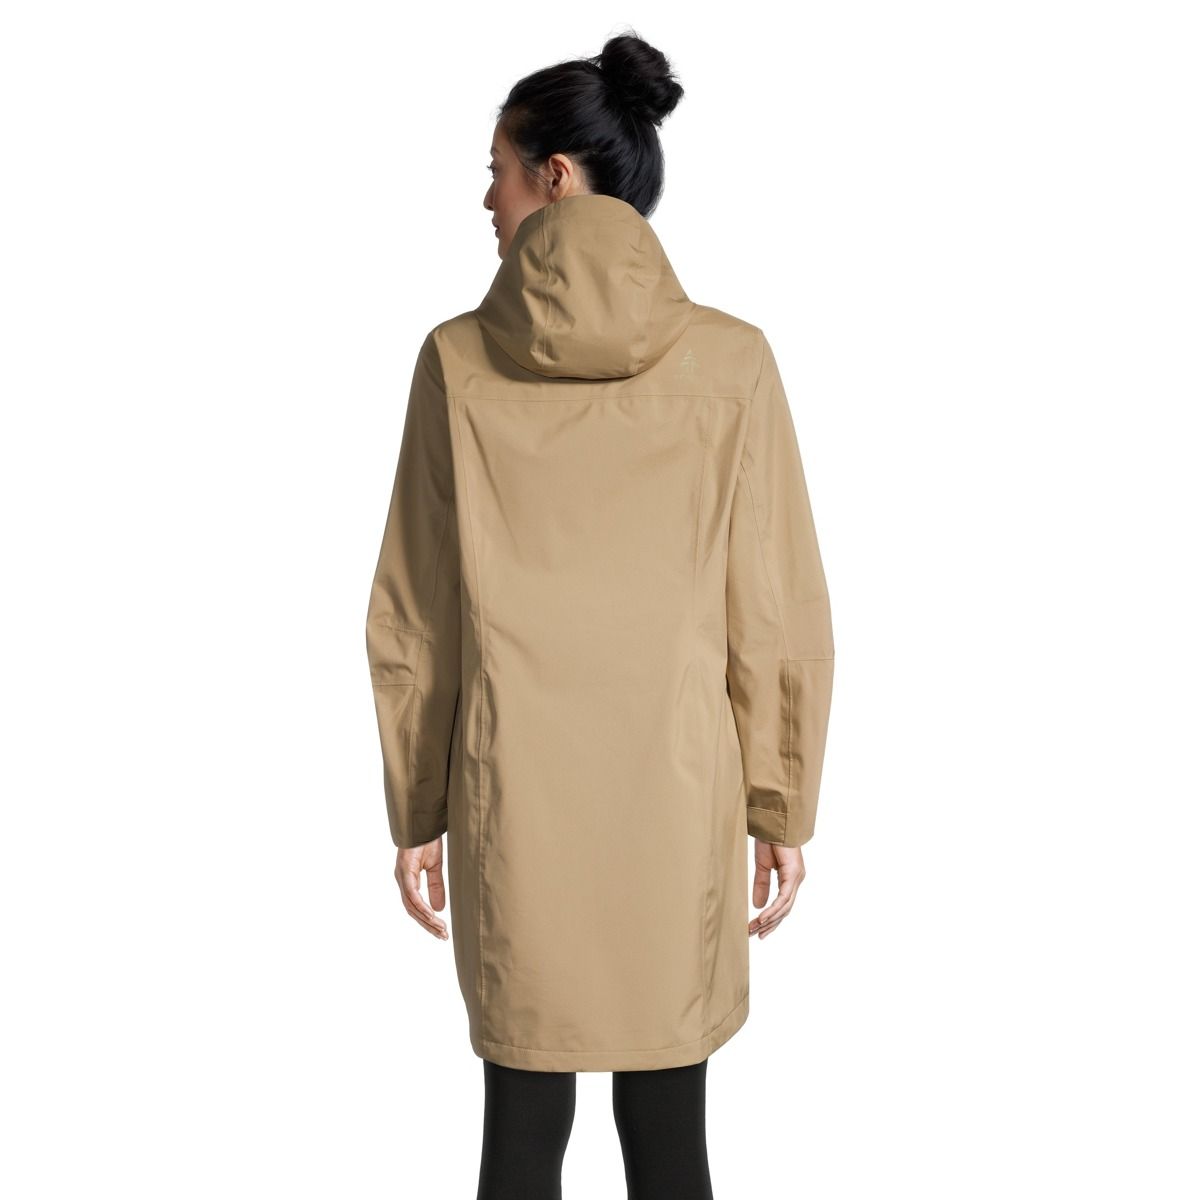 Woods Women's Toba 2L Hooded Rain Jacket, Waterproof, Breathable